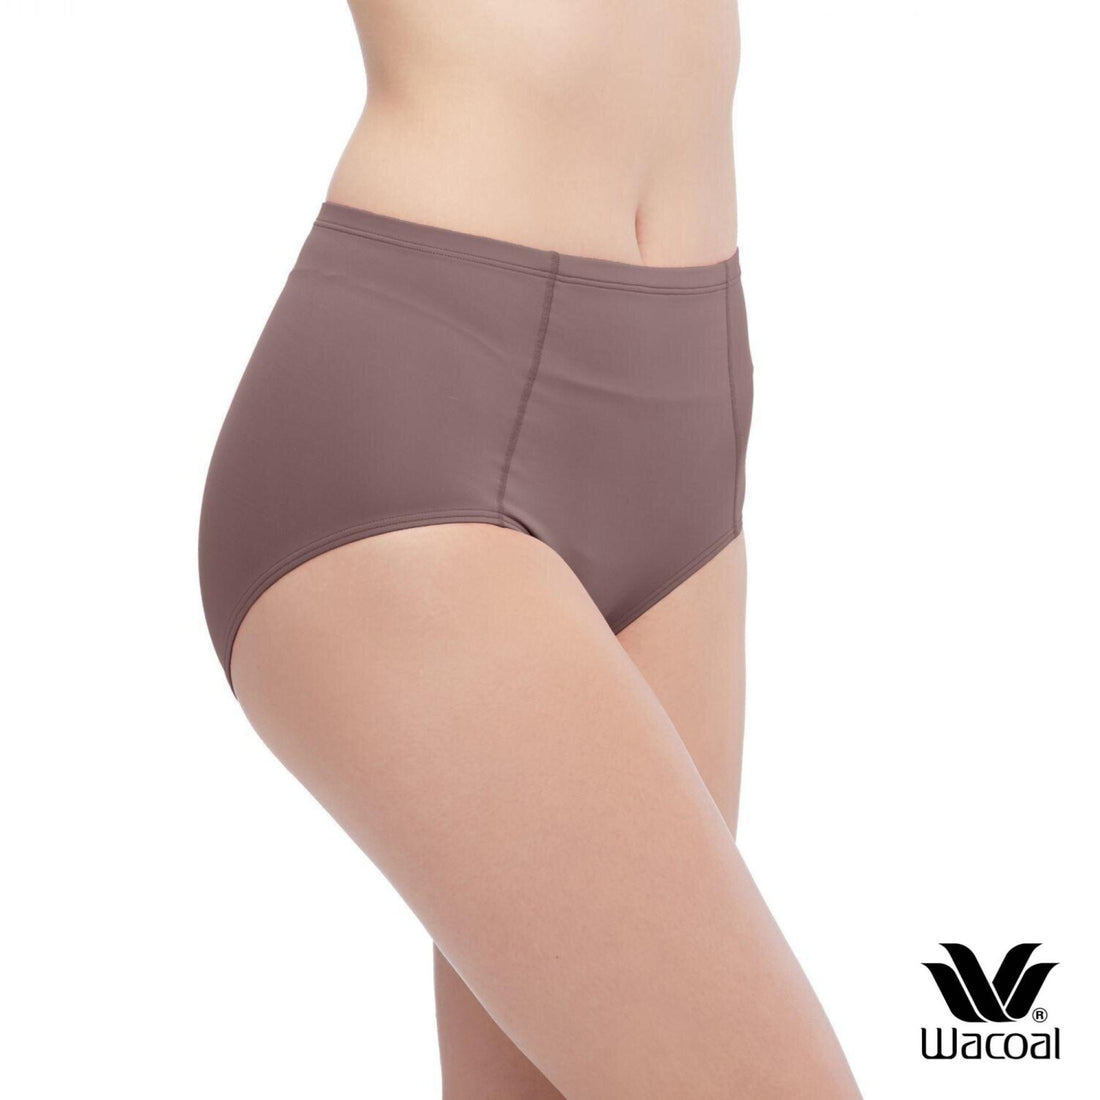 Wacoal H-fit secret support กางเกงในกระชับหน้าท้อง รูปแบบเต็มตัว Set 3 ชิ้น รุ่น WU4T36 คละสี (สีเบจ-สีดำ-สีน้ำตาลไหม้)